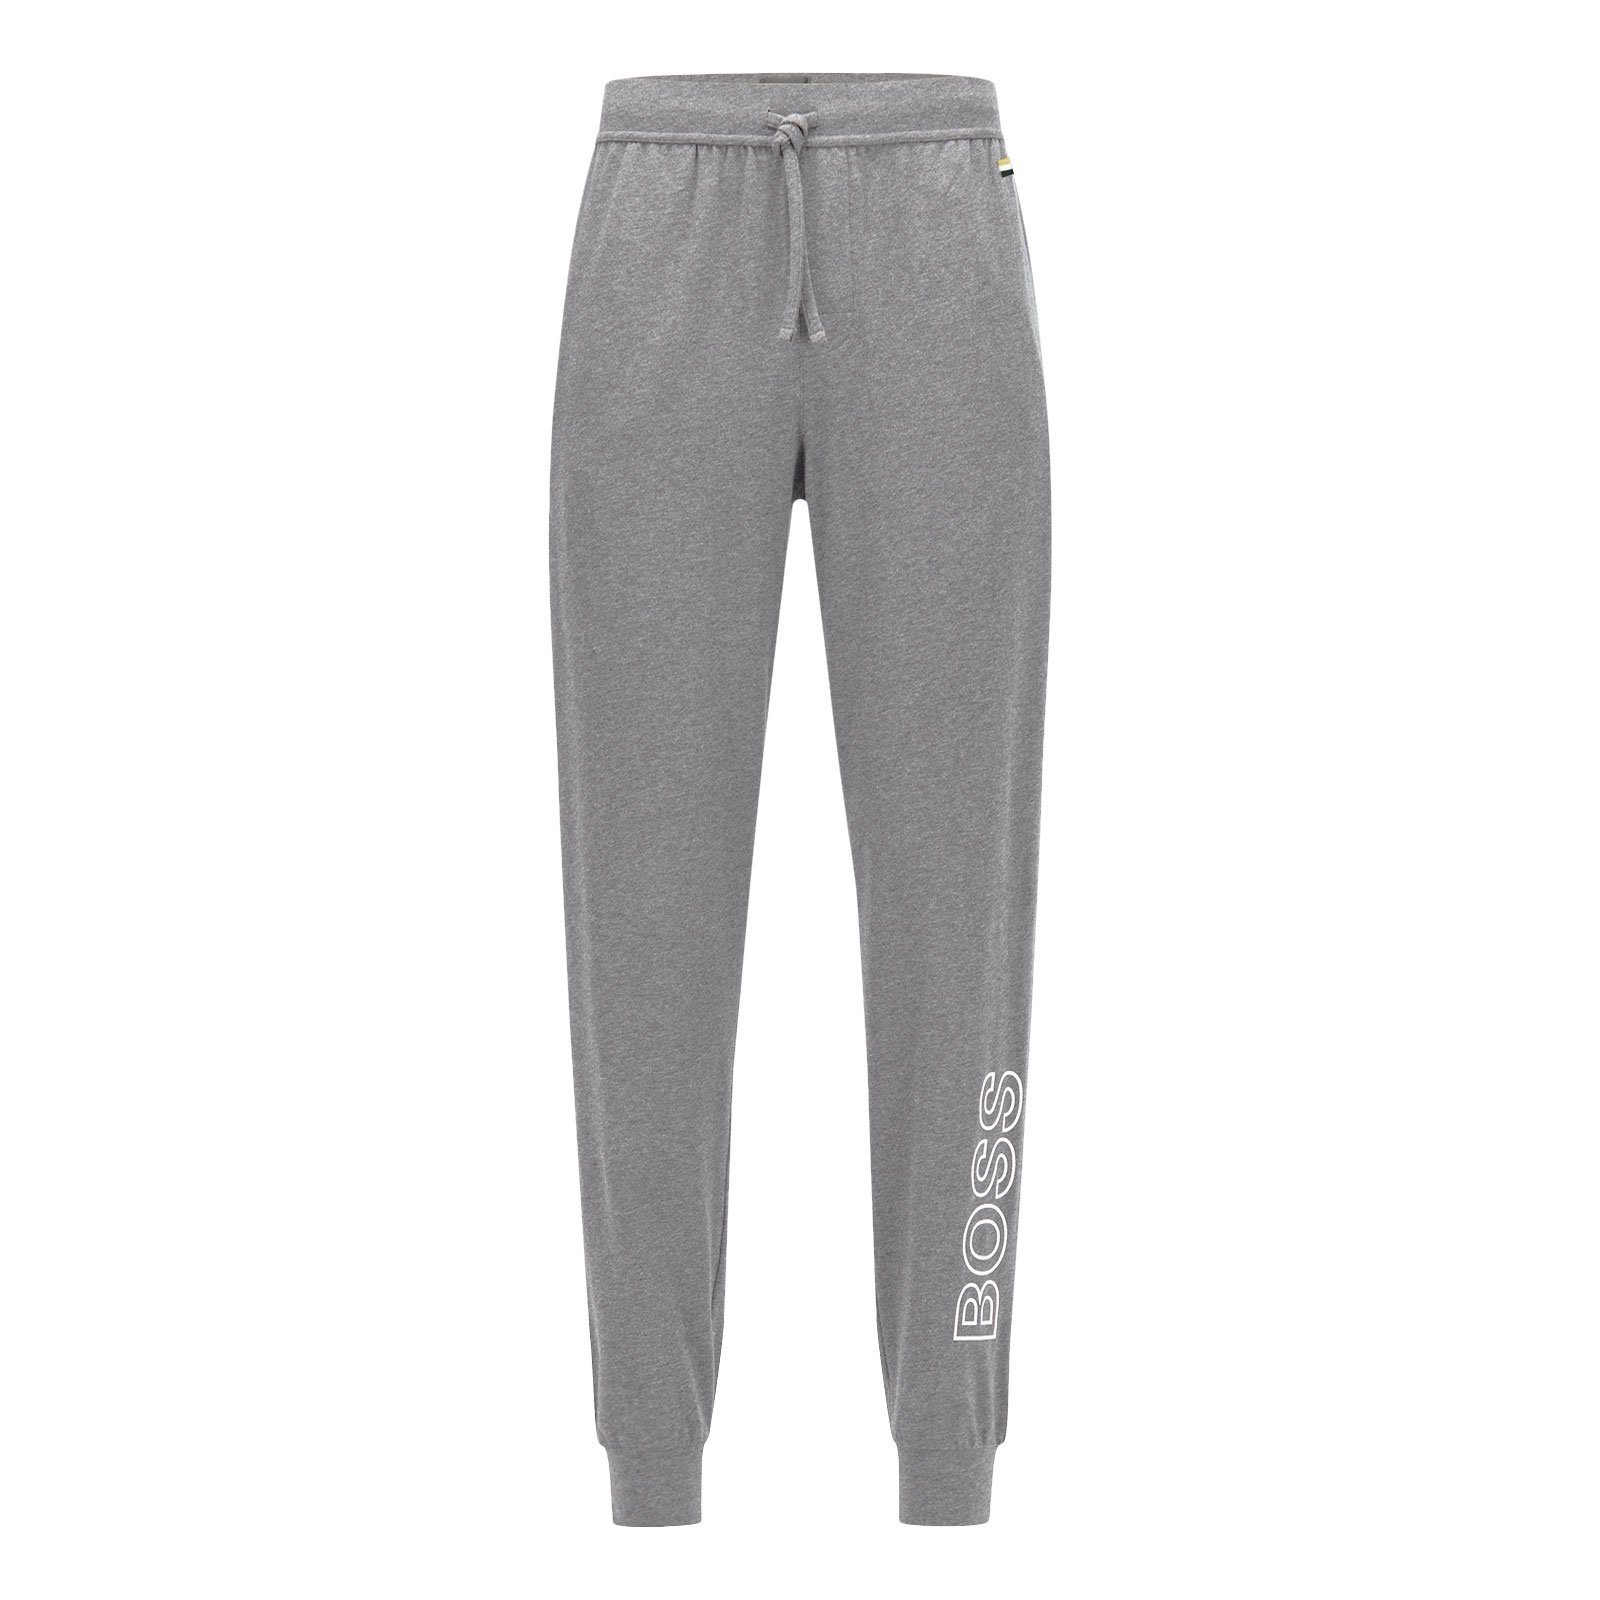 033 grey BOSS Jogginghose Identity medium mit Outline-Logo Pants